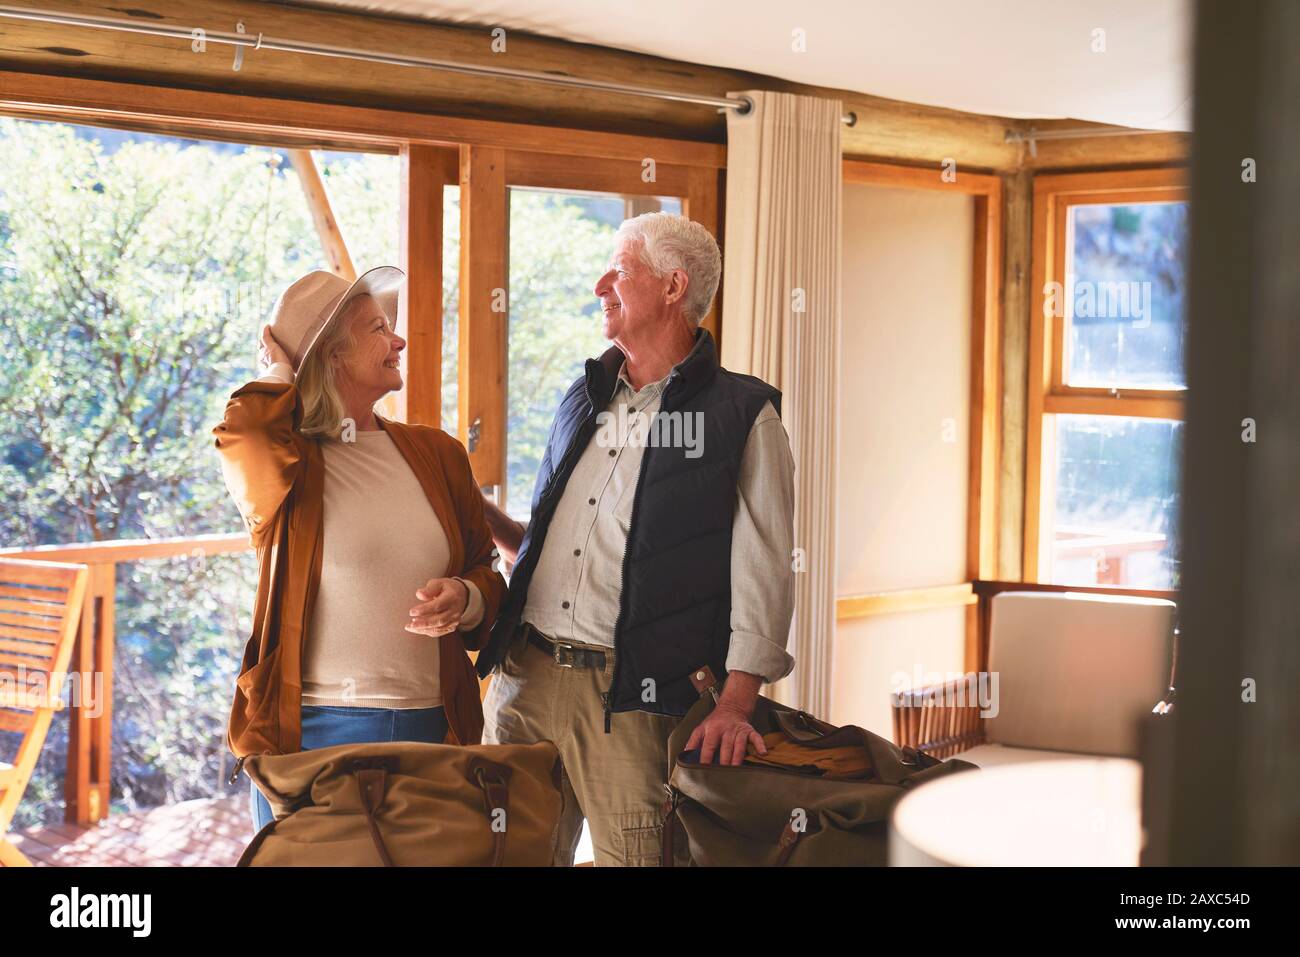 Happy playful senior couple in safari lodge hotel room Stock Photo